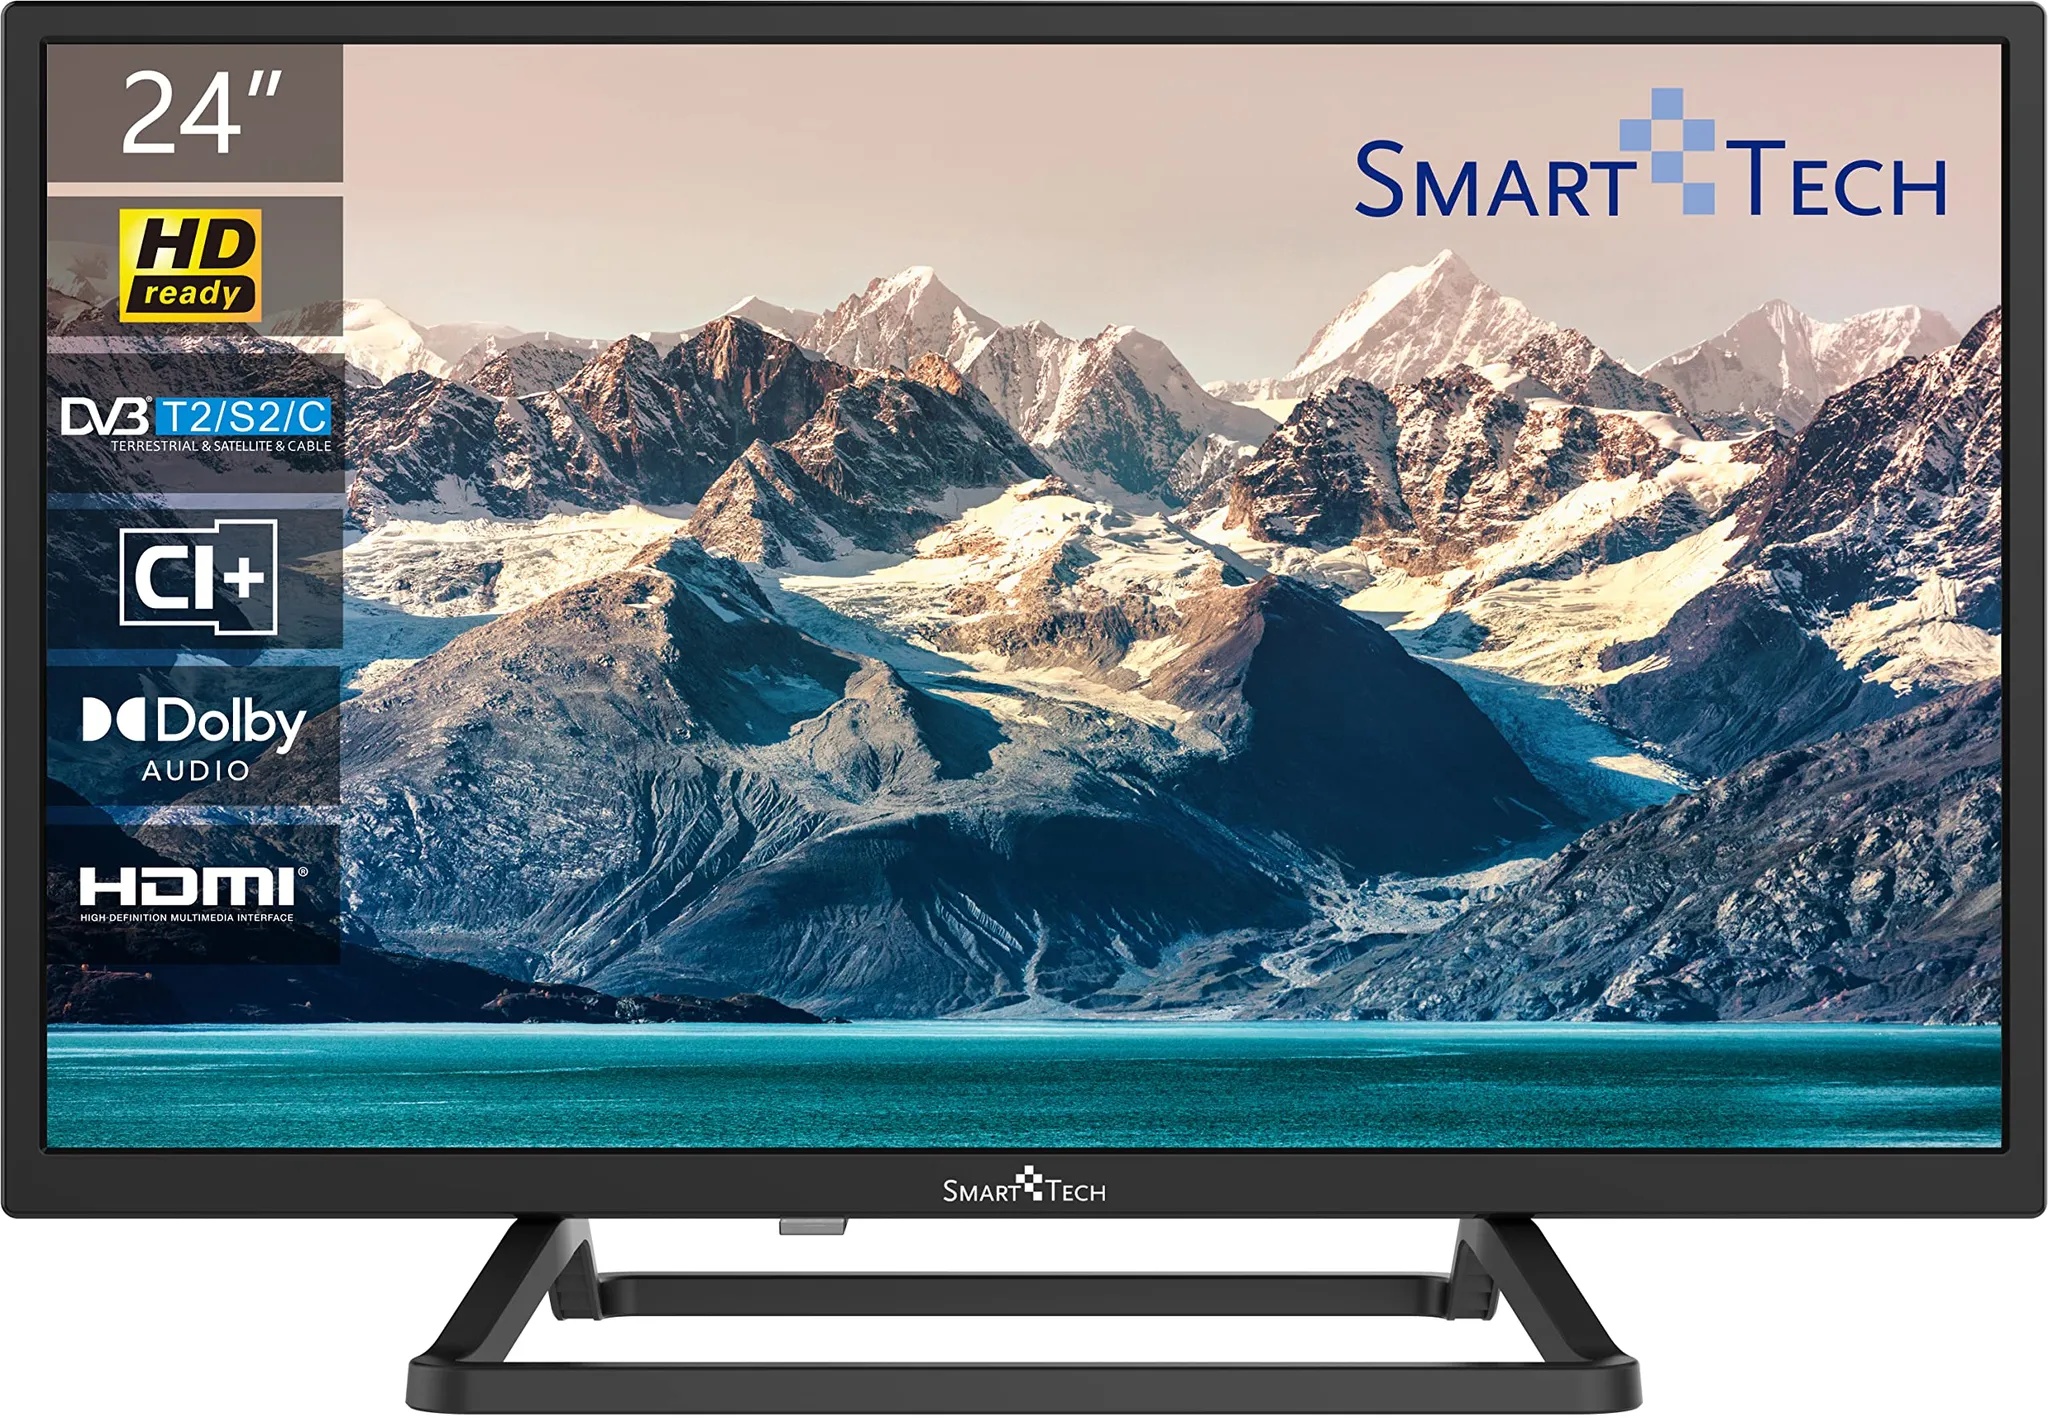 SMART TECH HD LED TV 24 Zoll (60 cm) 24HN10T3, Triple Tuner, Dolby Audio, H.264, 3xHDMI, 2xUSB, Schwarz